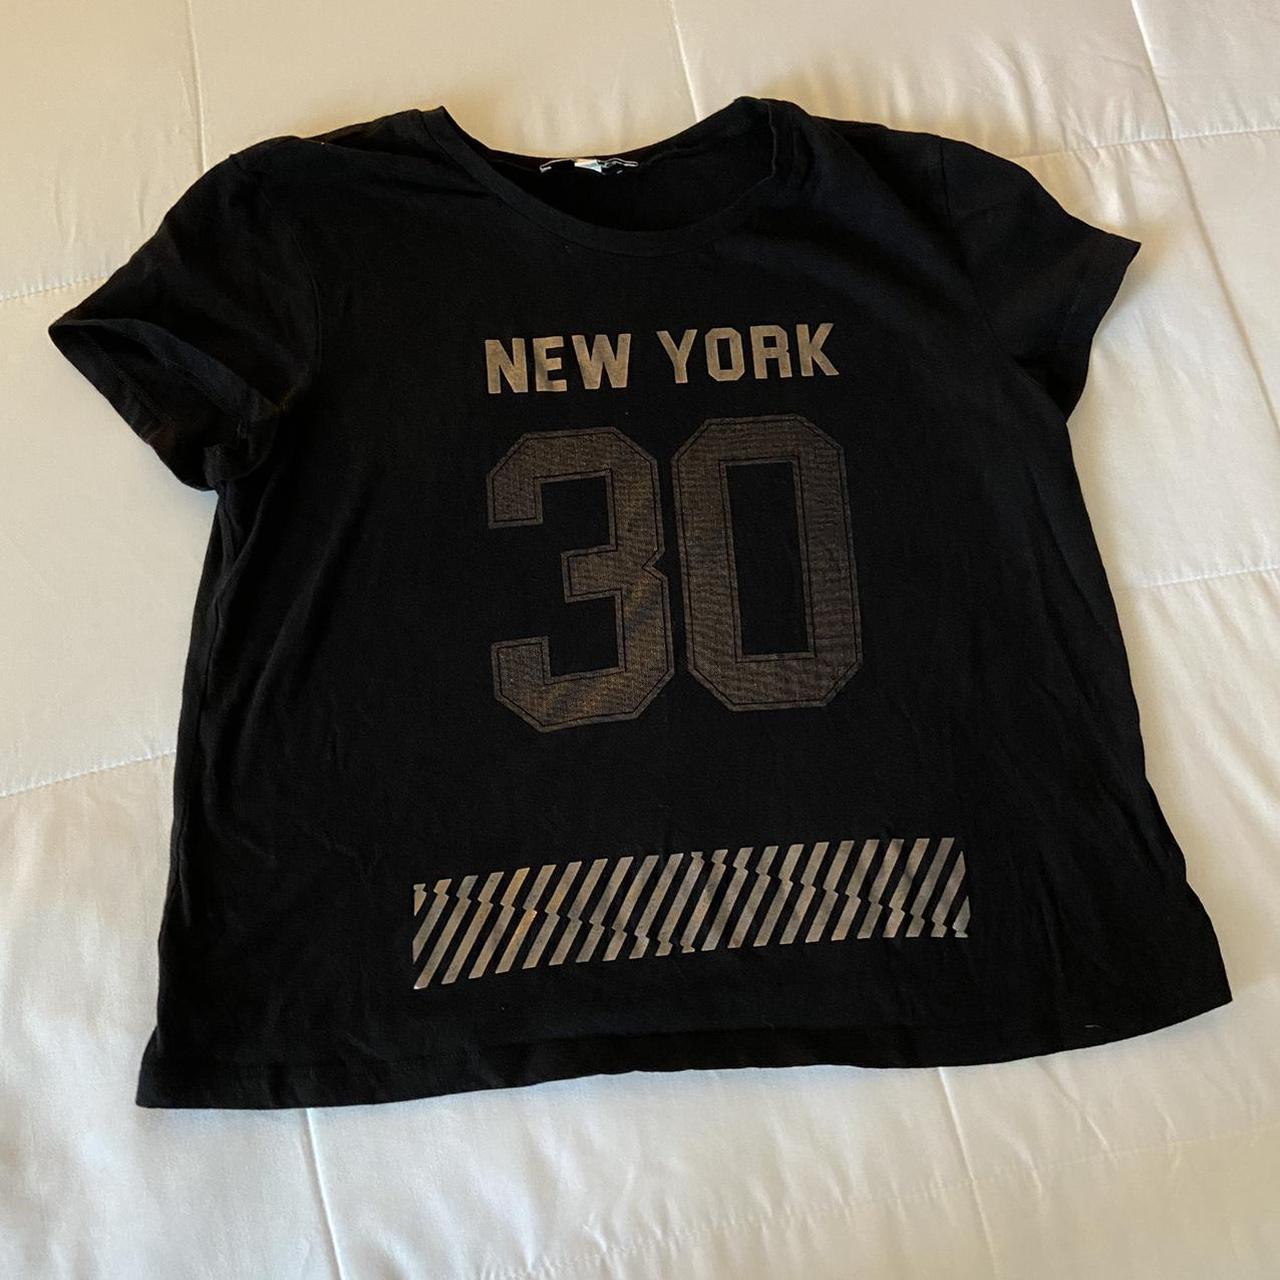 Product Image 1 - Black New York Tee Shirt

Size